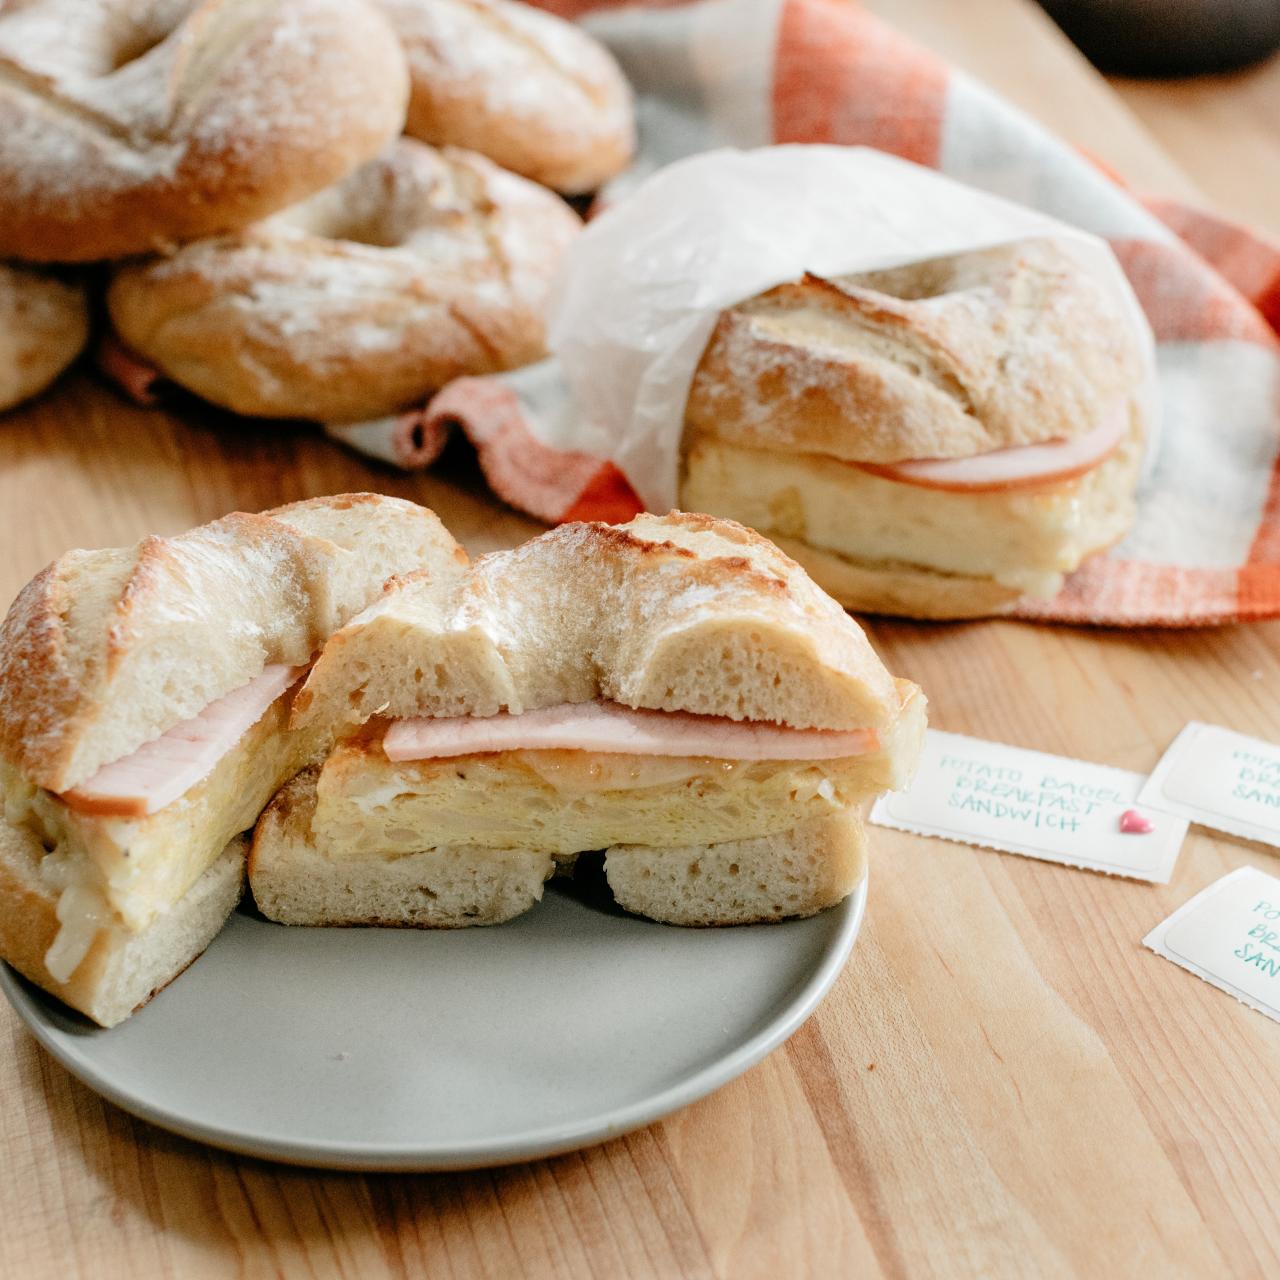 Bagel Breakfast Sandwiches Recipe - Freezer & Quick Meal